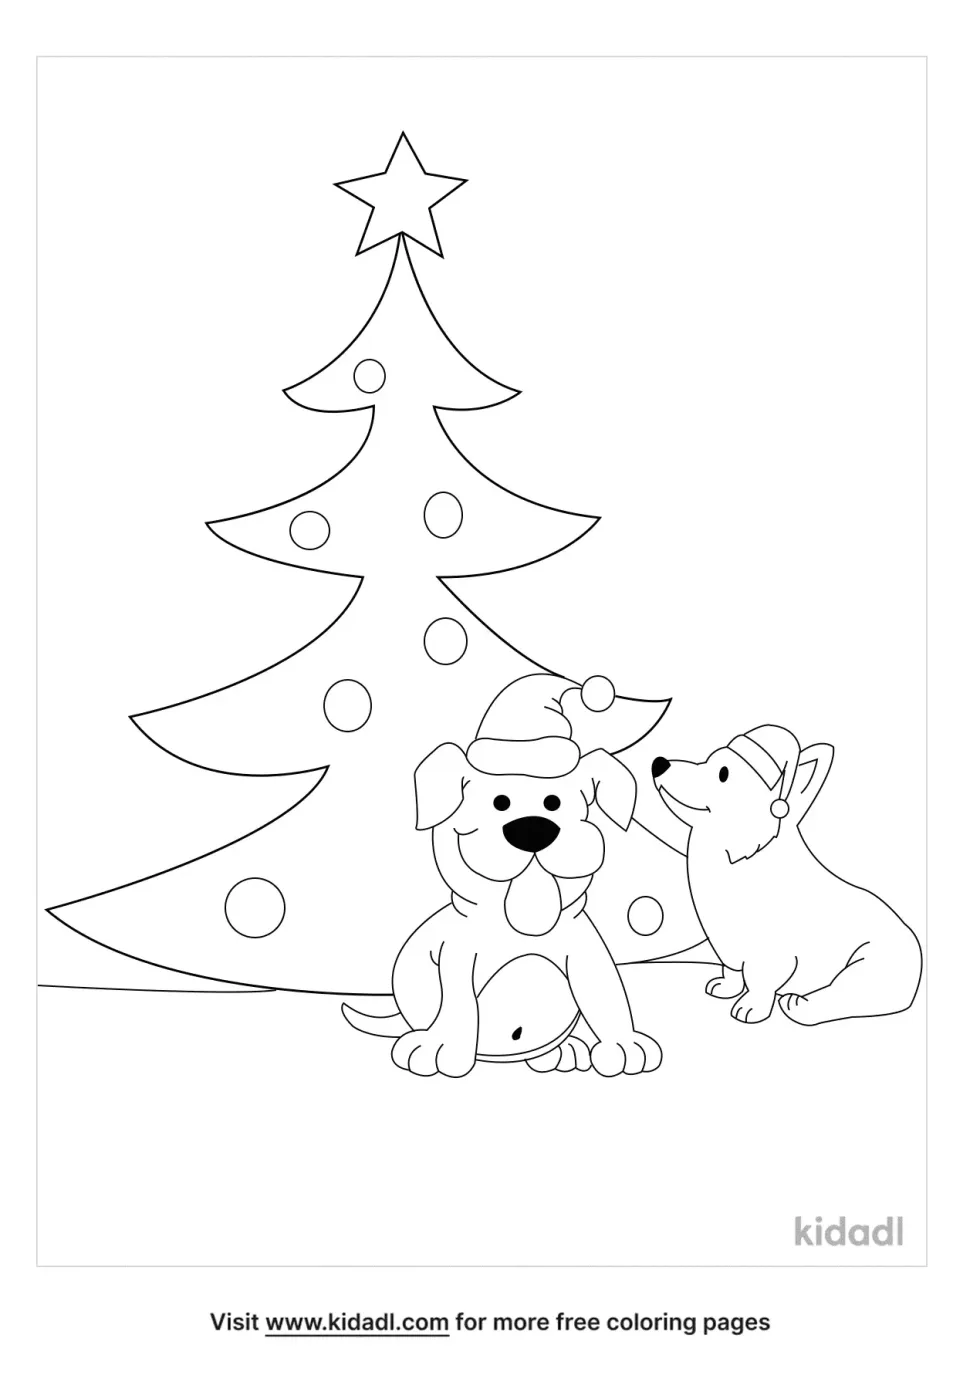 Dogs And Christmas Tree